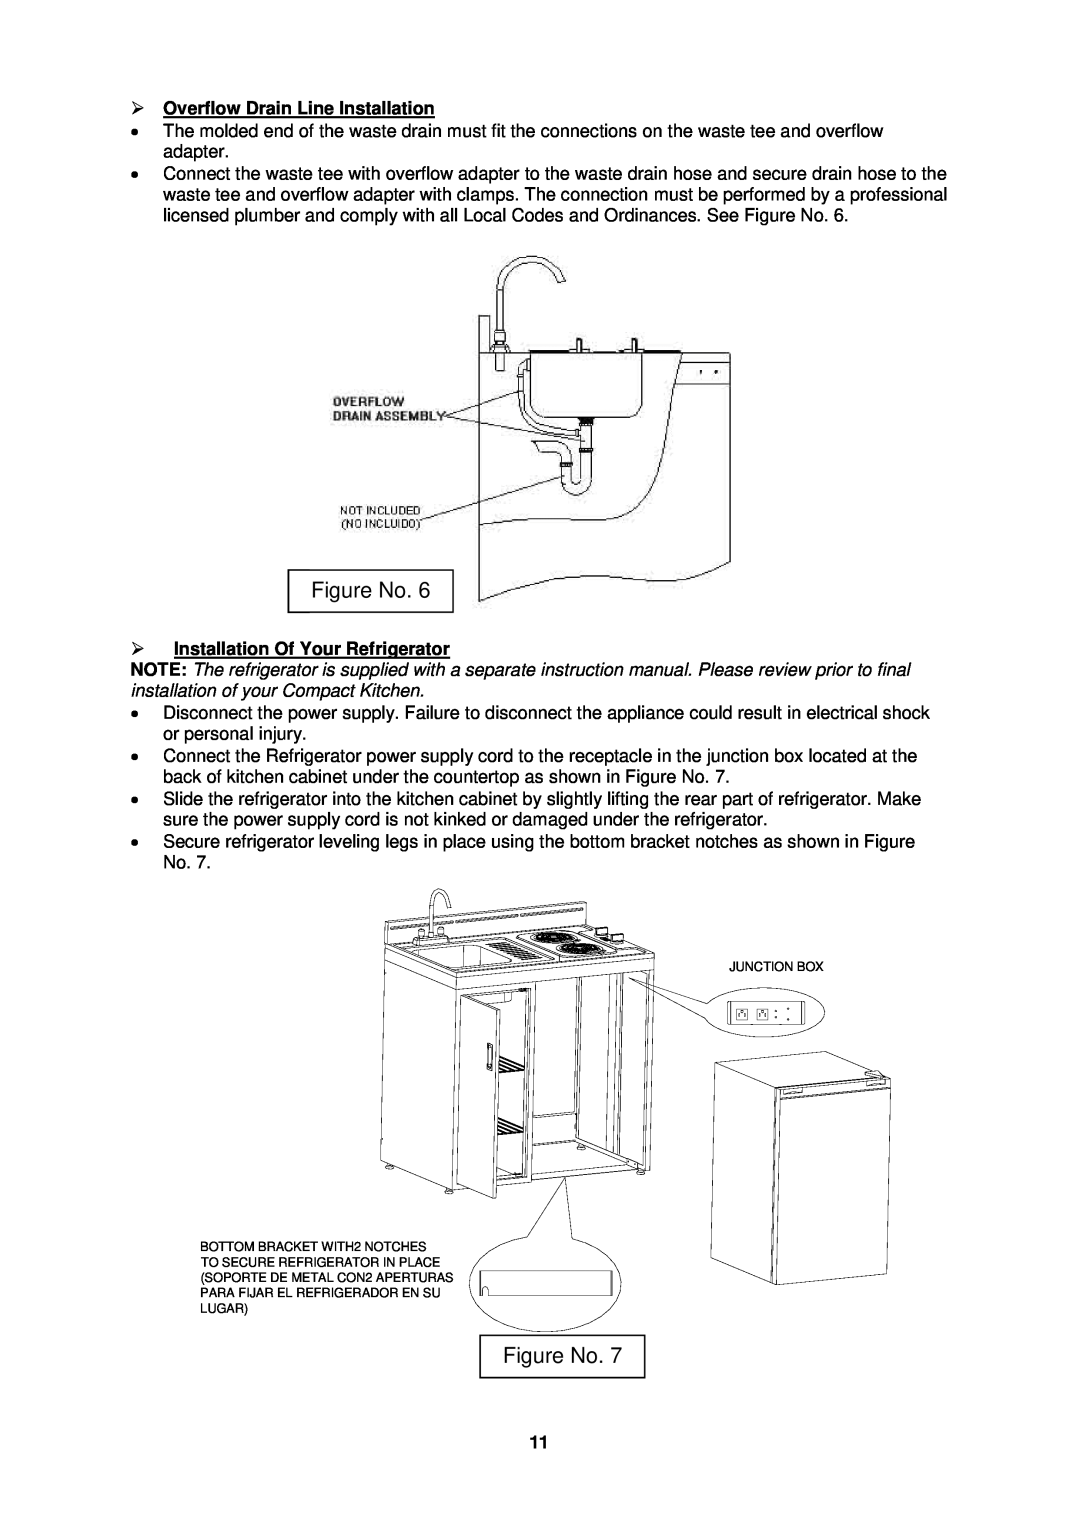 Avanti CK36-1 Figure No, Overflow Drain Line Installation, Installation Of Your Refrigerator, Junction Box 